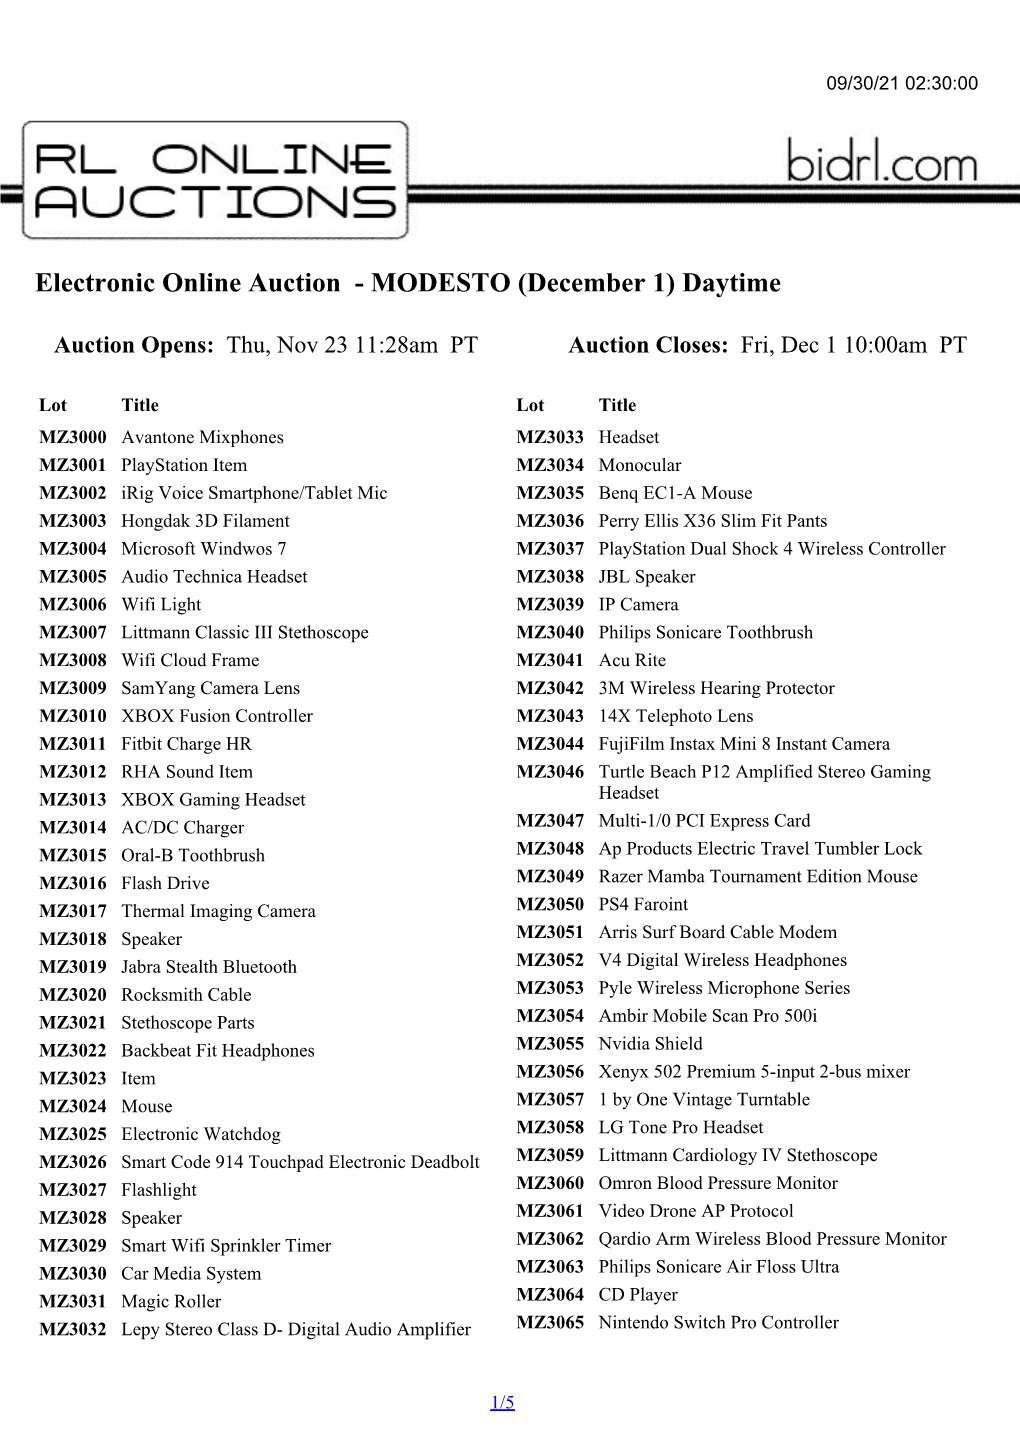 Electronic Online Auction - MODESTO (December 1) Daytime